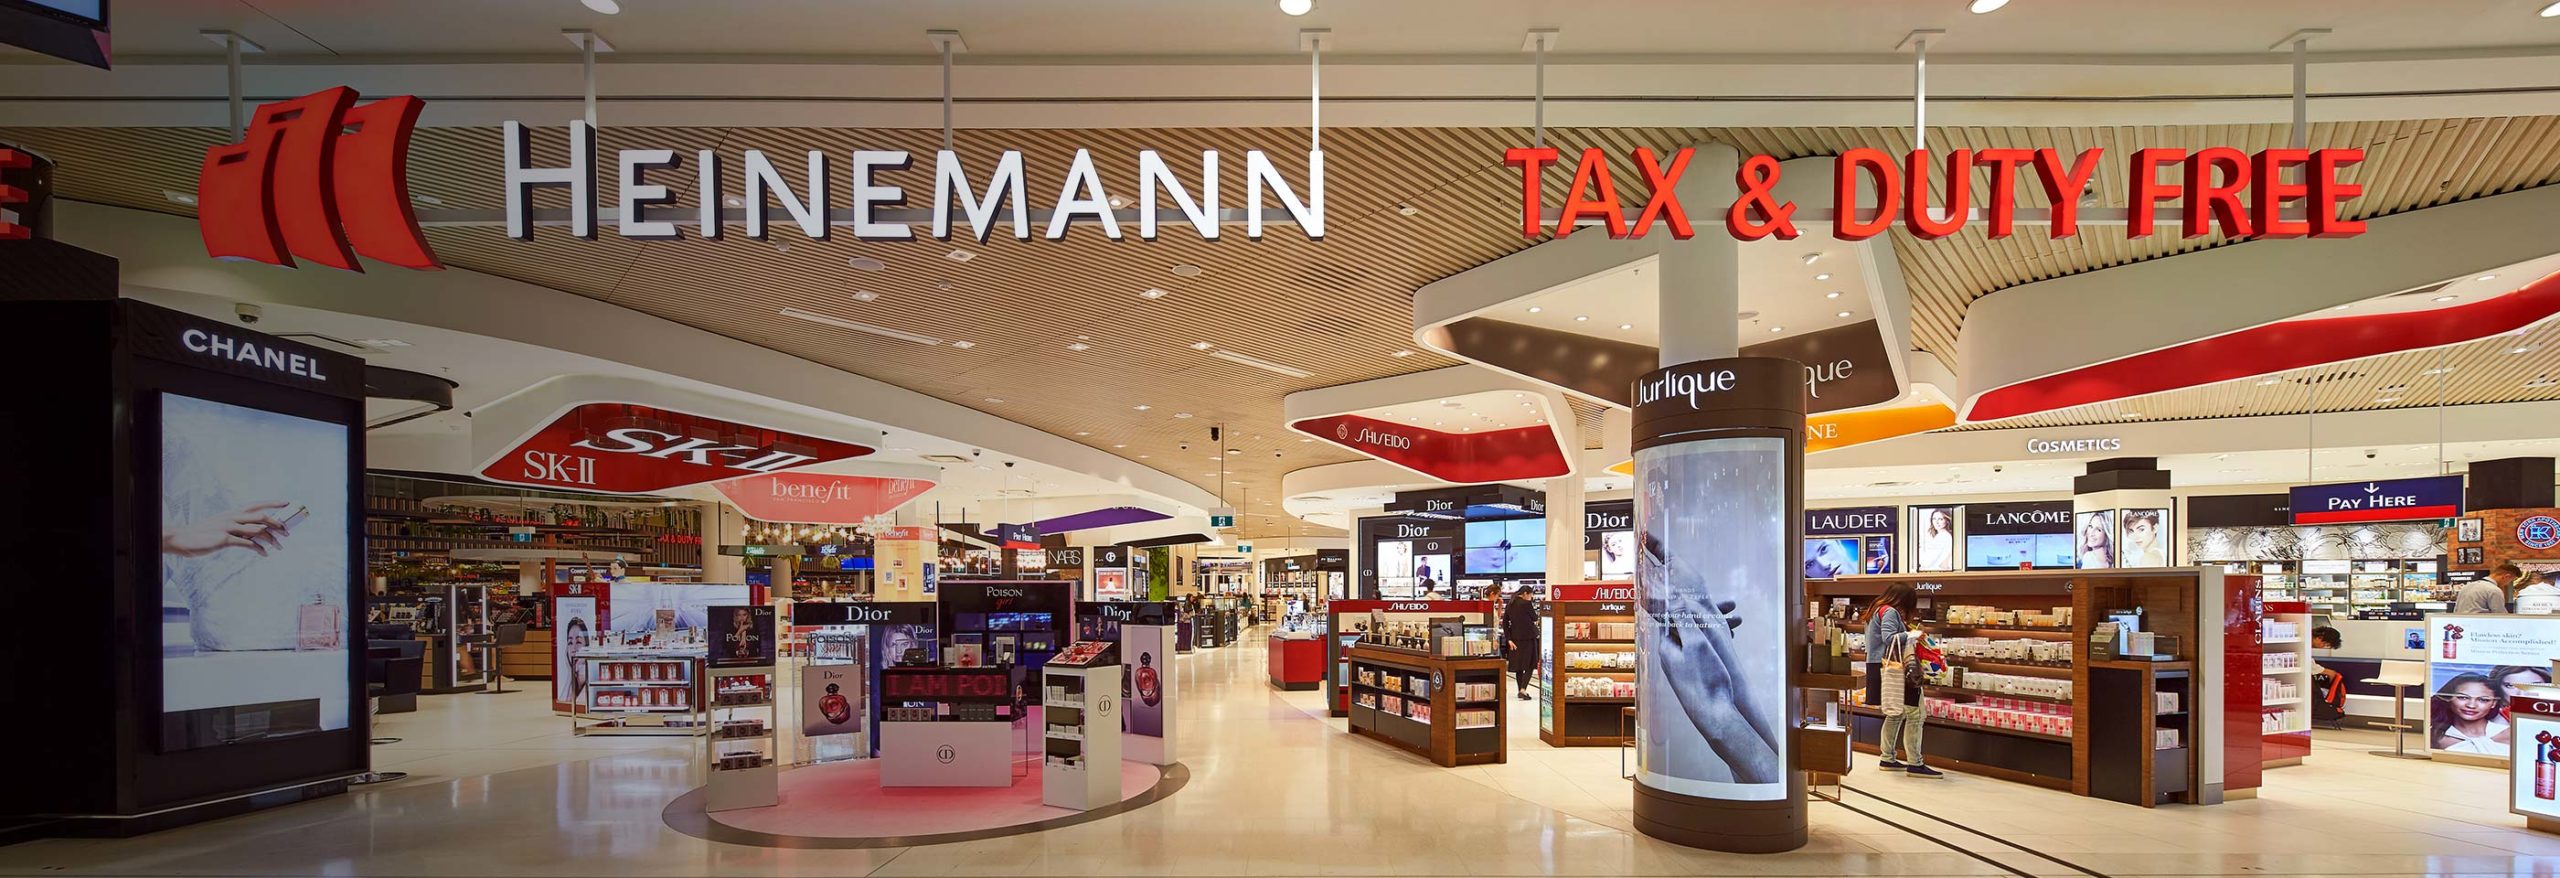 Heinemann Sydney Duty-Free Shop